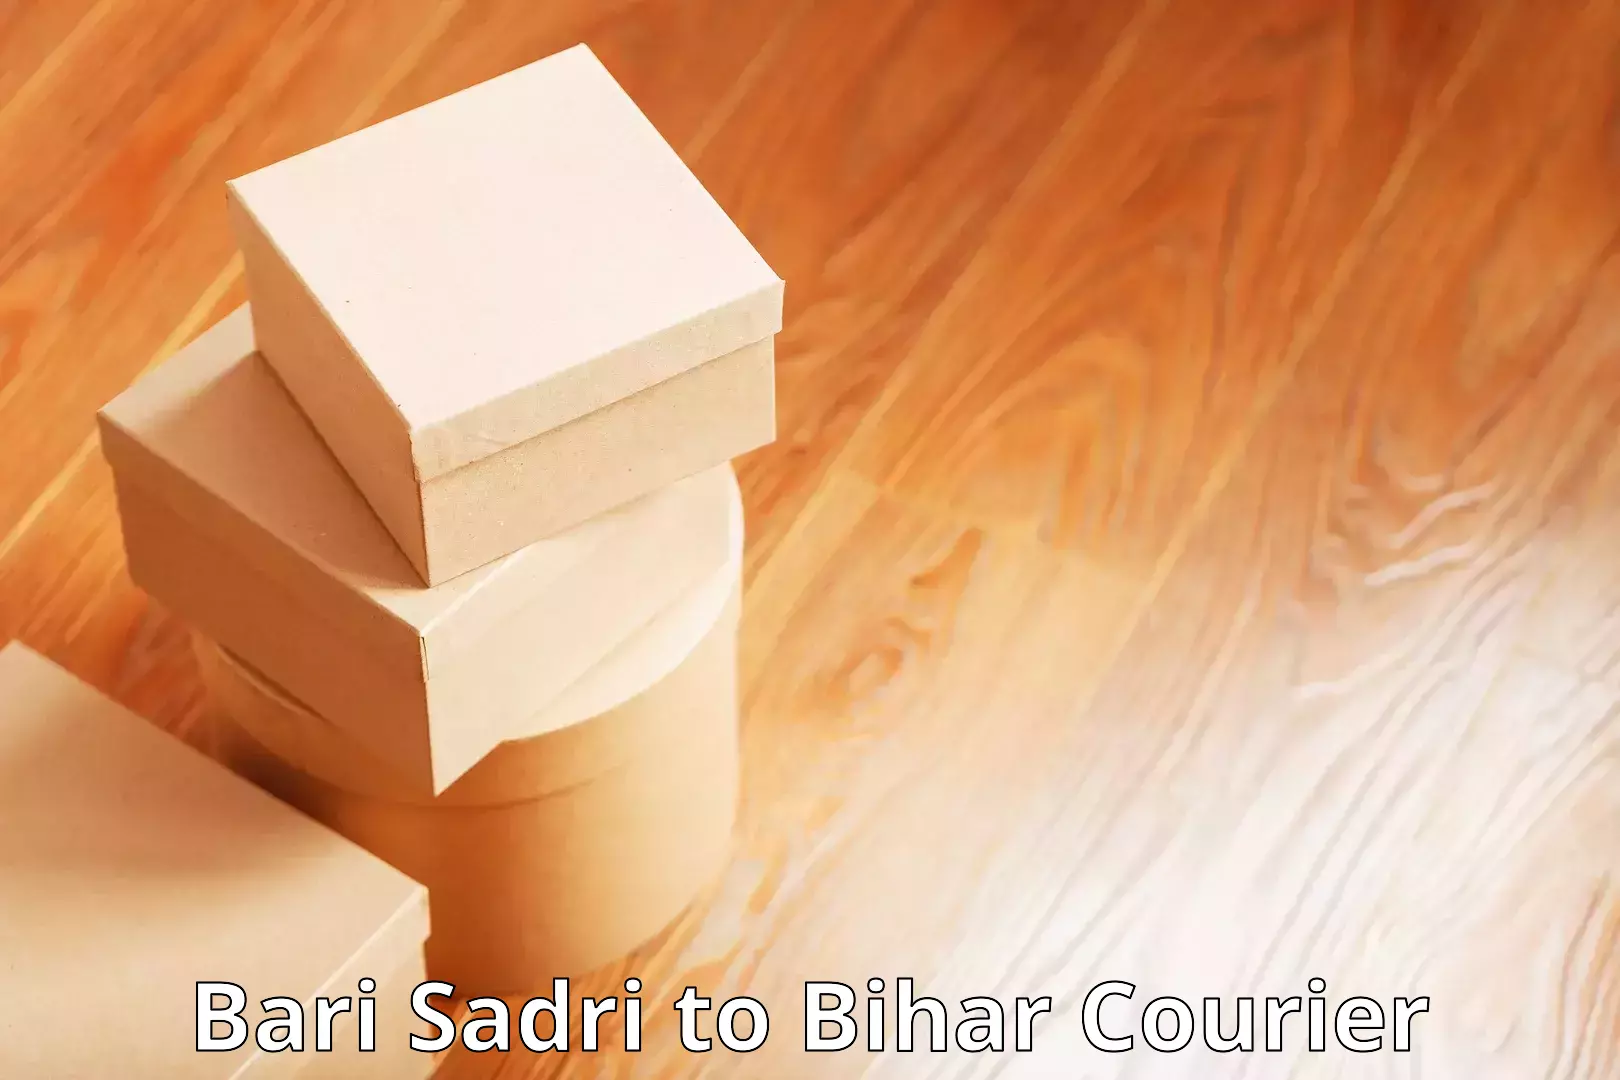 Business delivery service Bari Sadri to Bihar